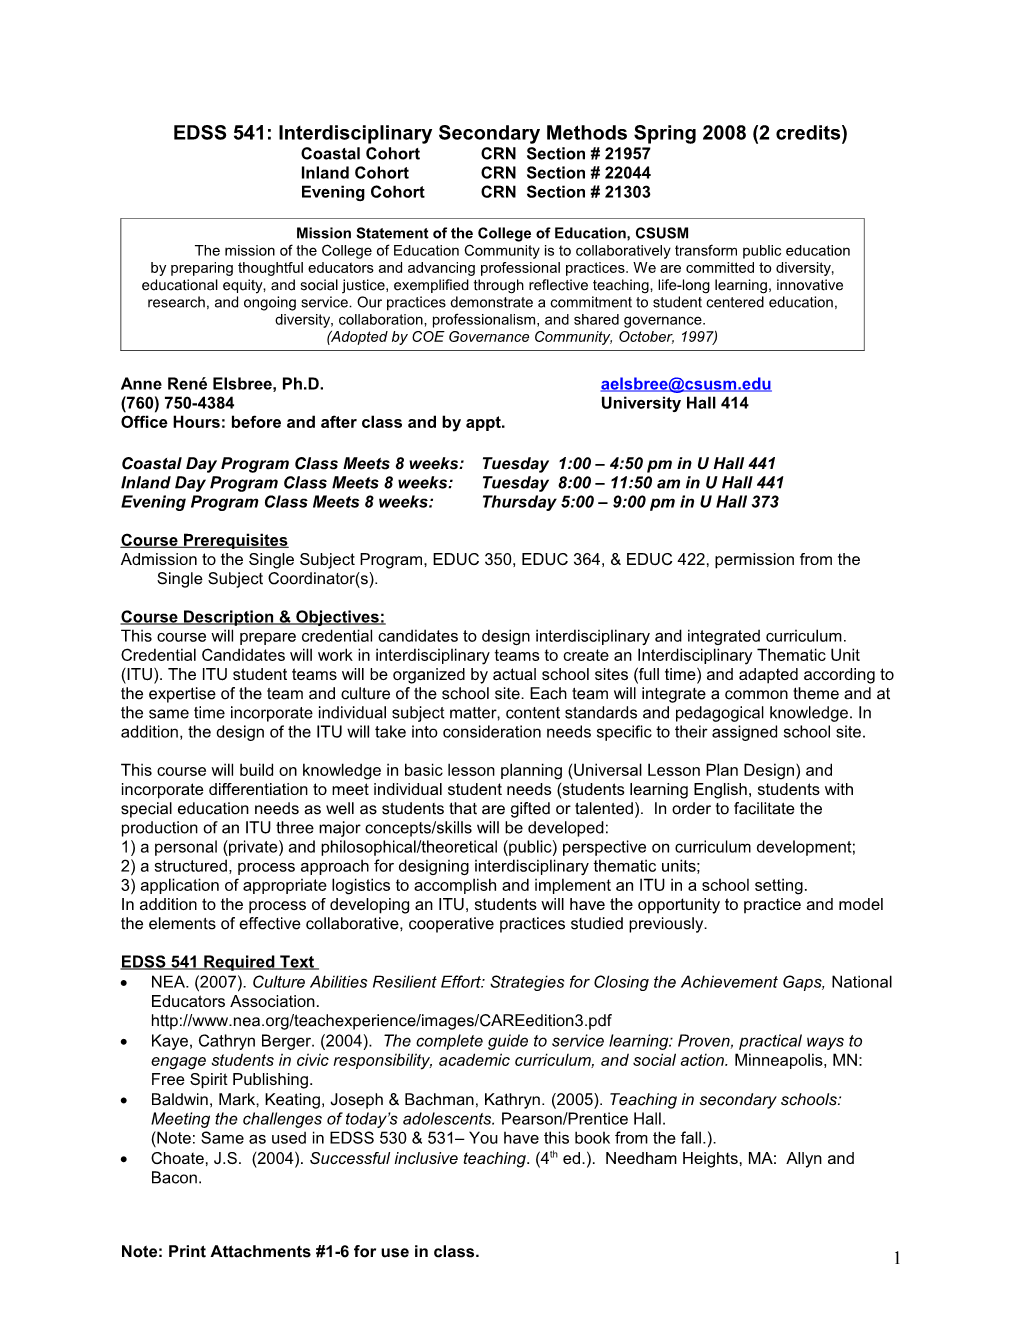 EDSS 541: Interdisciplinary Secondary Methods Spring 2008 (2 Credits)